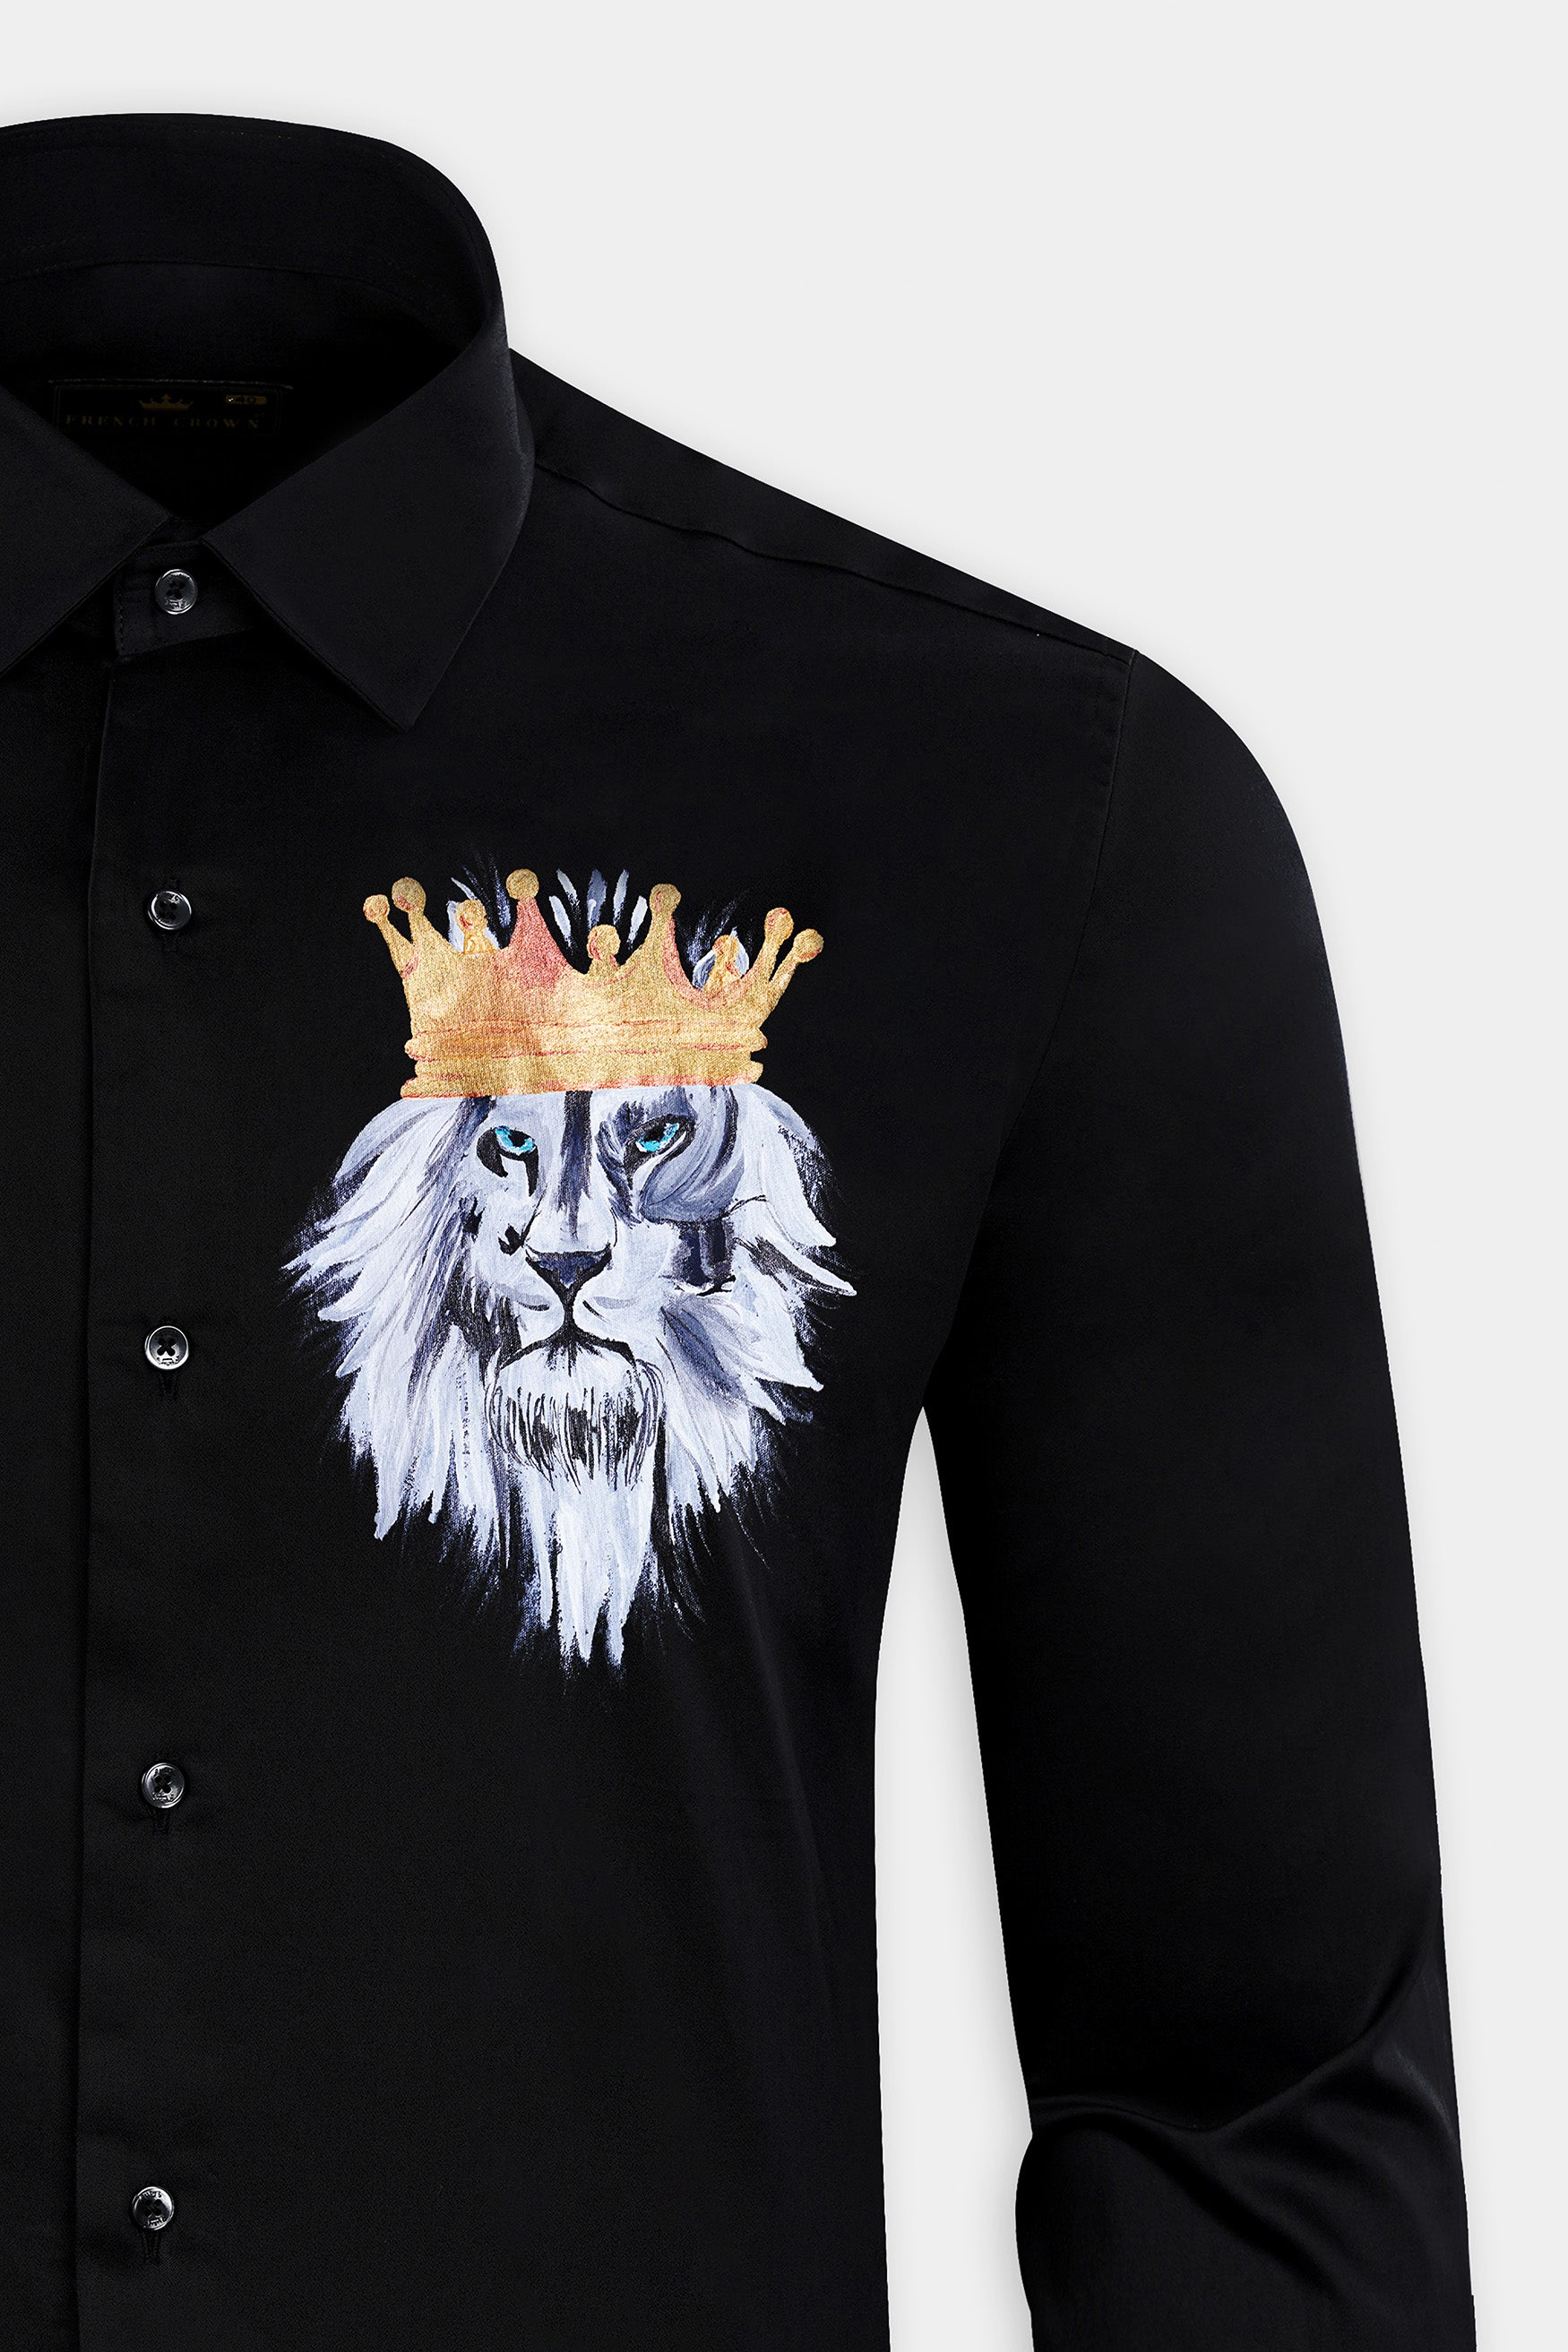 Jade Black Lion hand painted effect Printed Subtle Sheen Super Soft Premium Cotton Designer Shirt